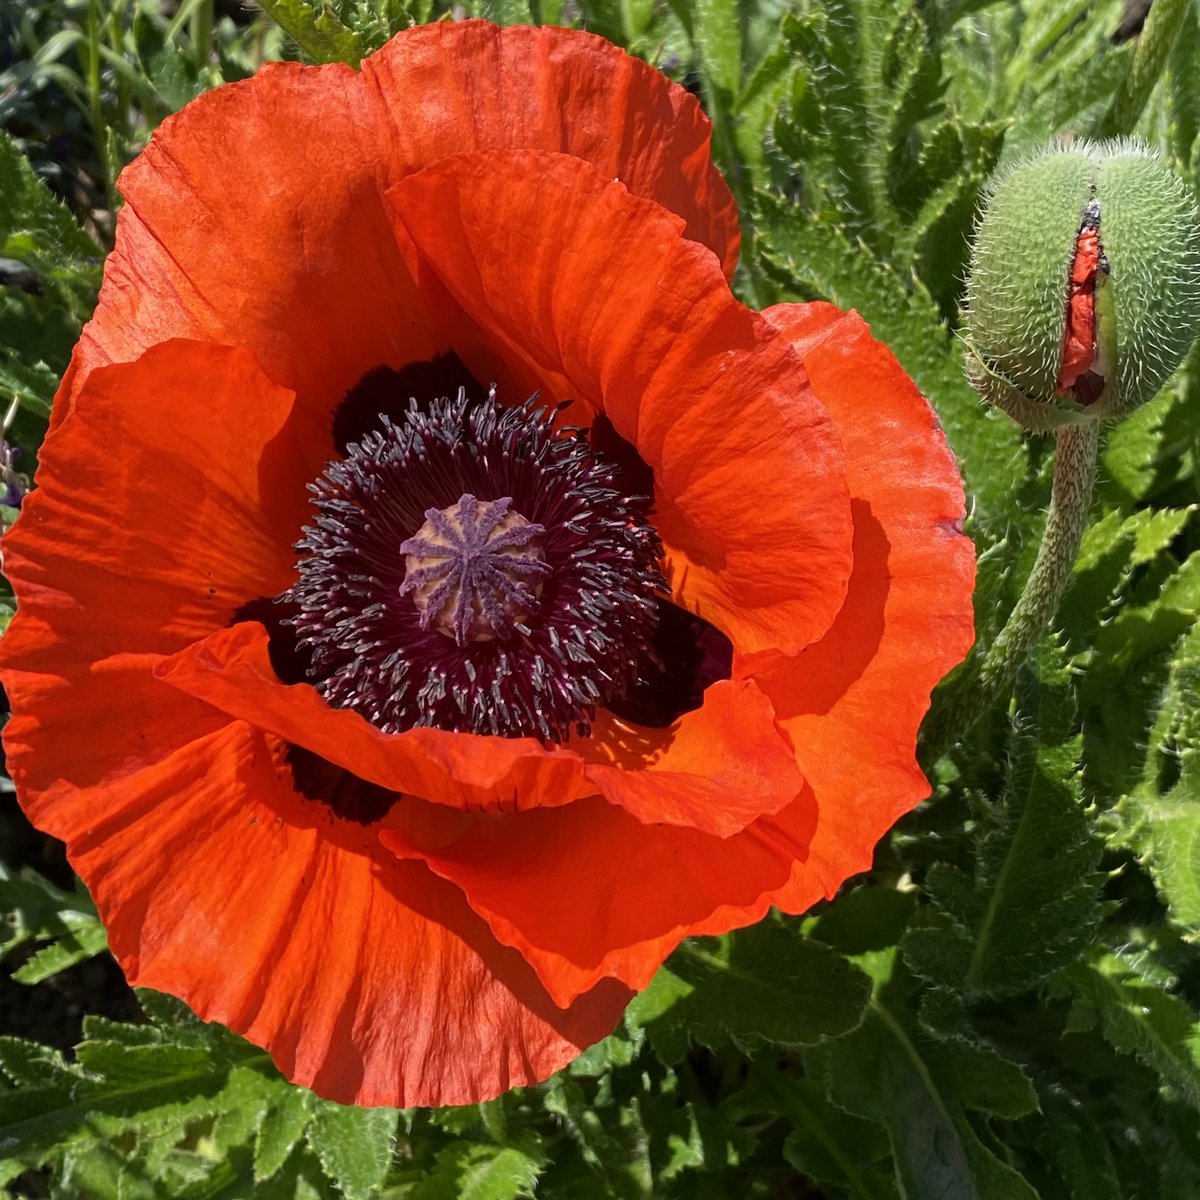 A beautiful poppy on my allotment plot. #GardensHour